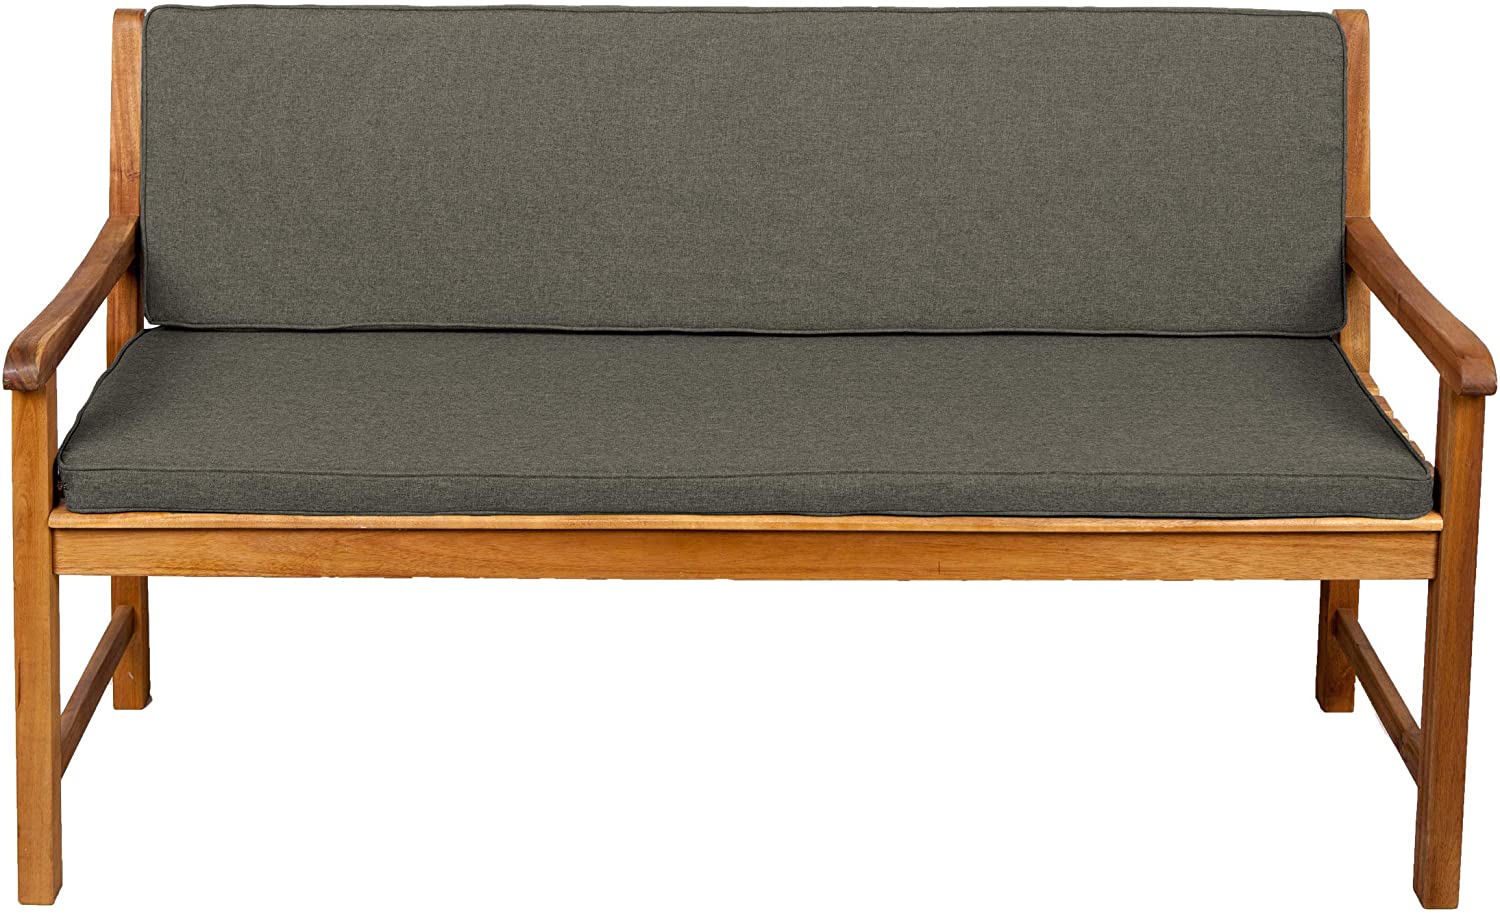 Bench Cushion for Swinging Hammock Set, Smooth Seat Cushion and Backrest